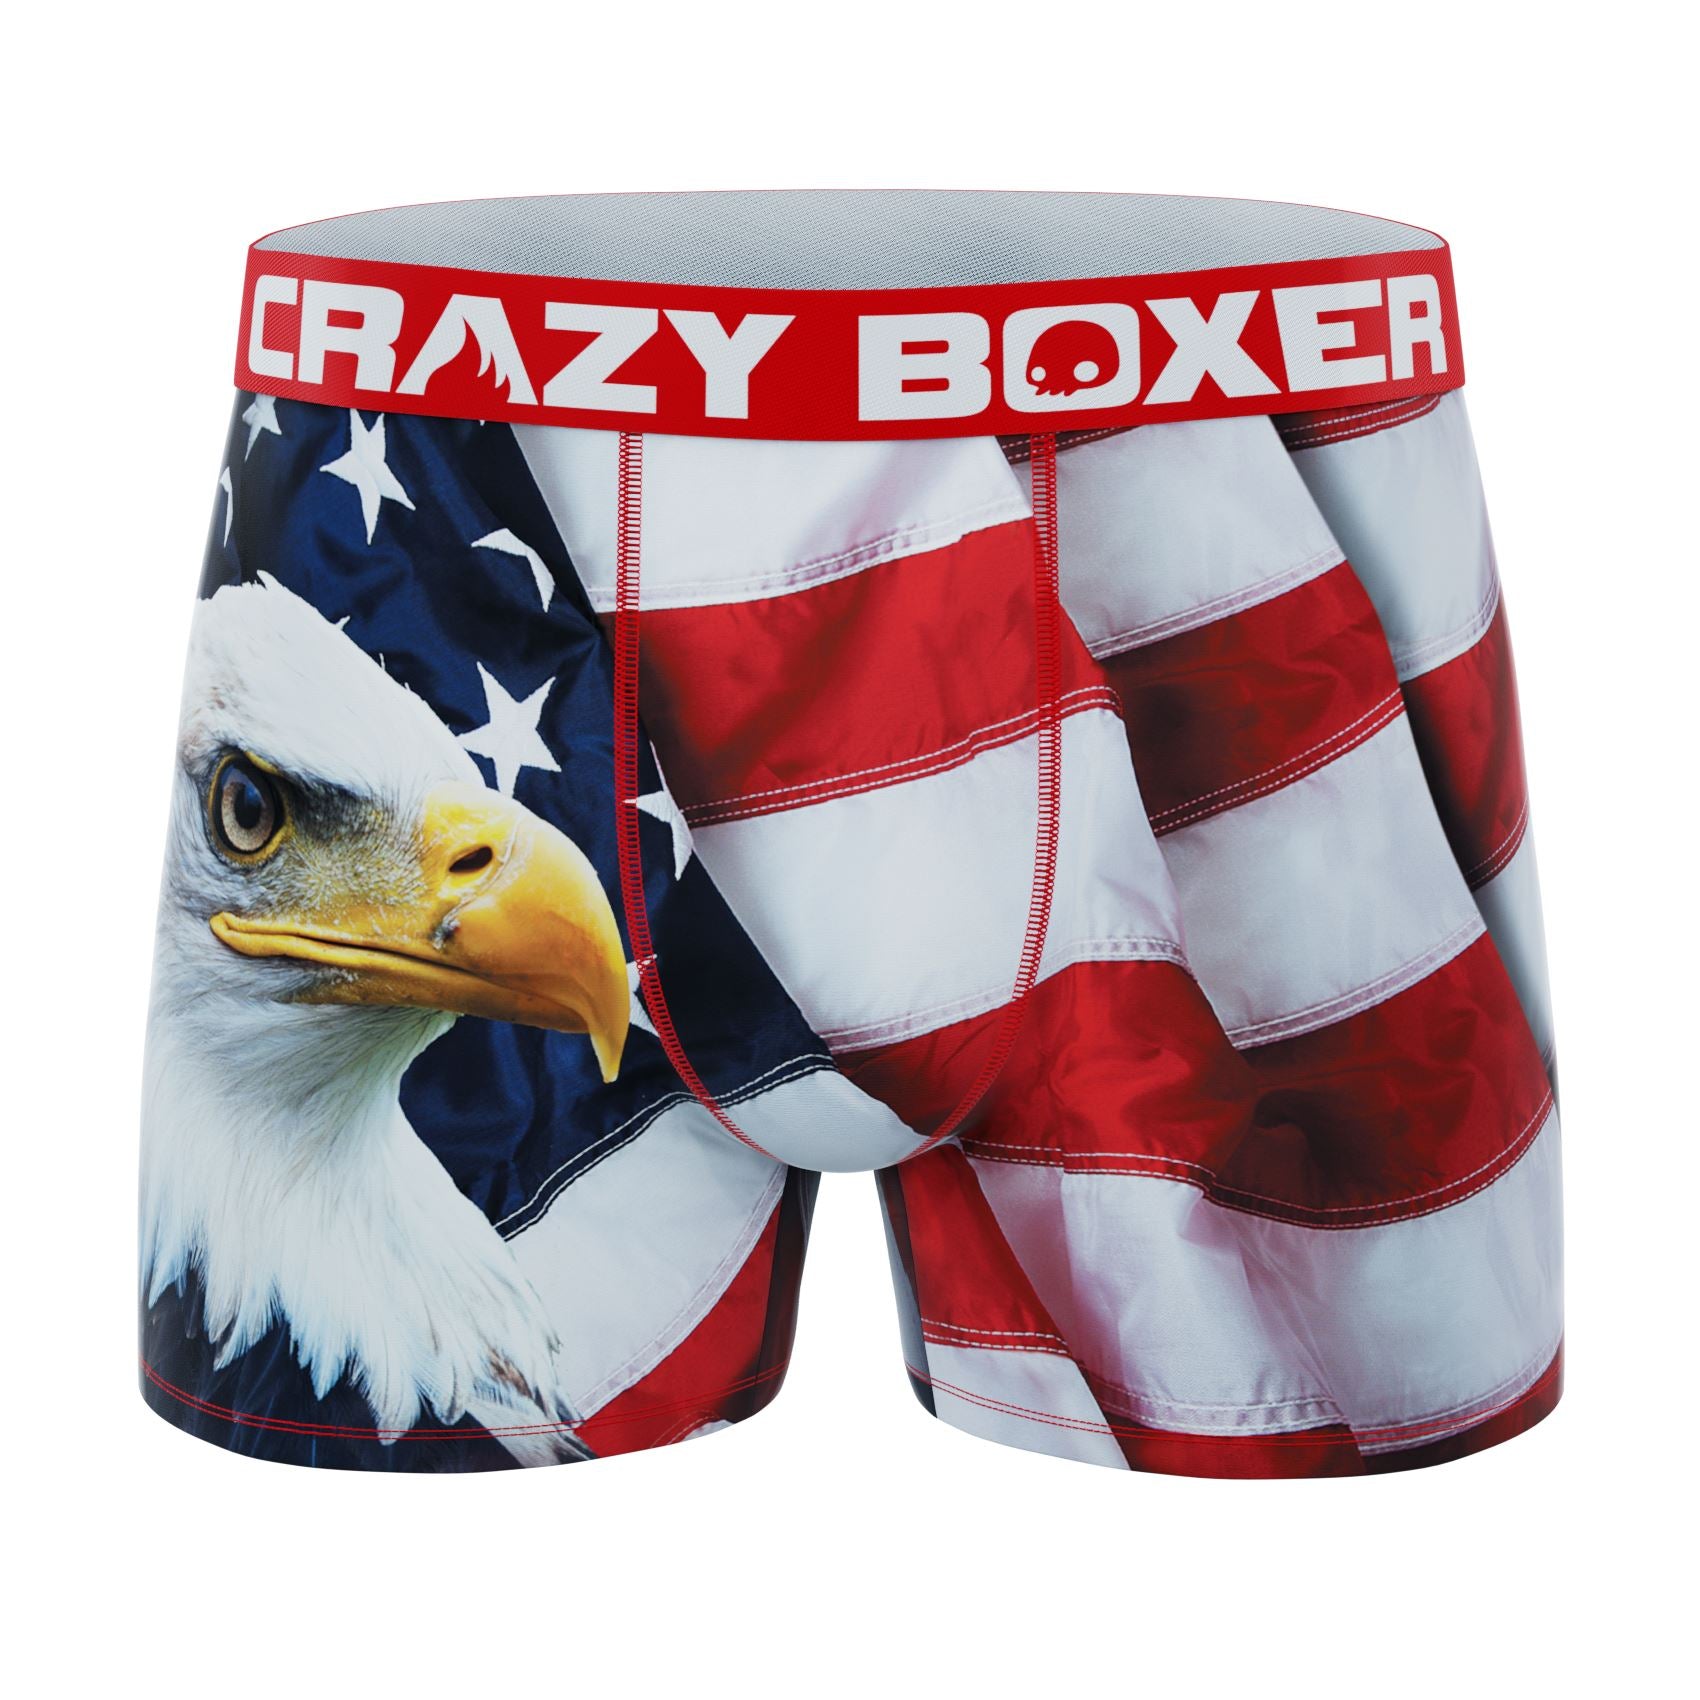 CRAZYBOXER Men's USA Flags Ducky Boxer Briefs (2 pack)